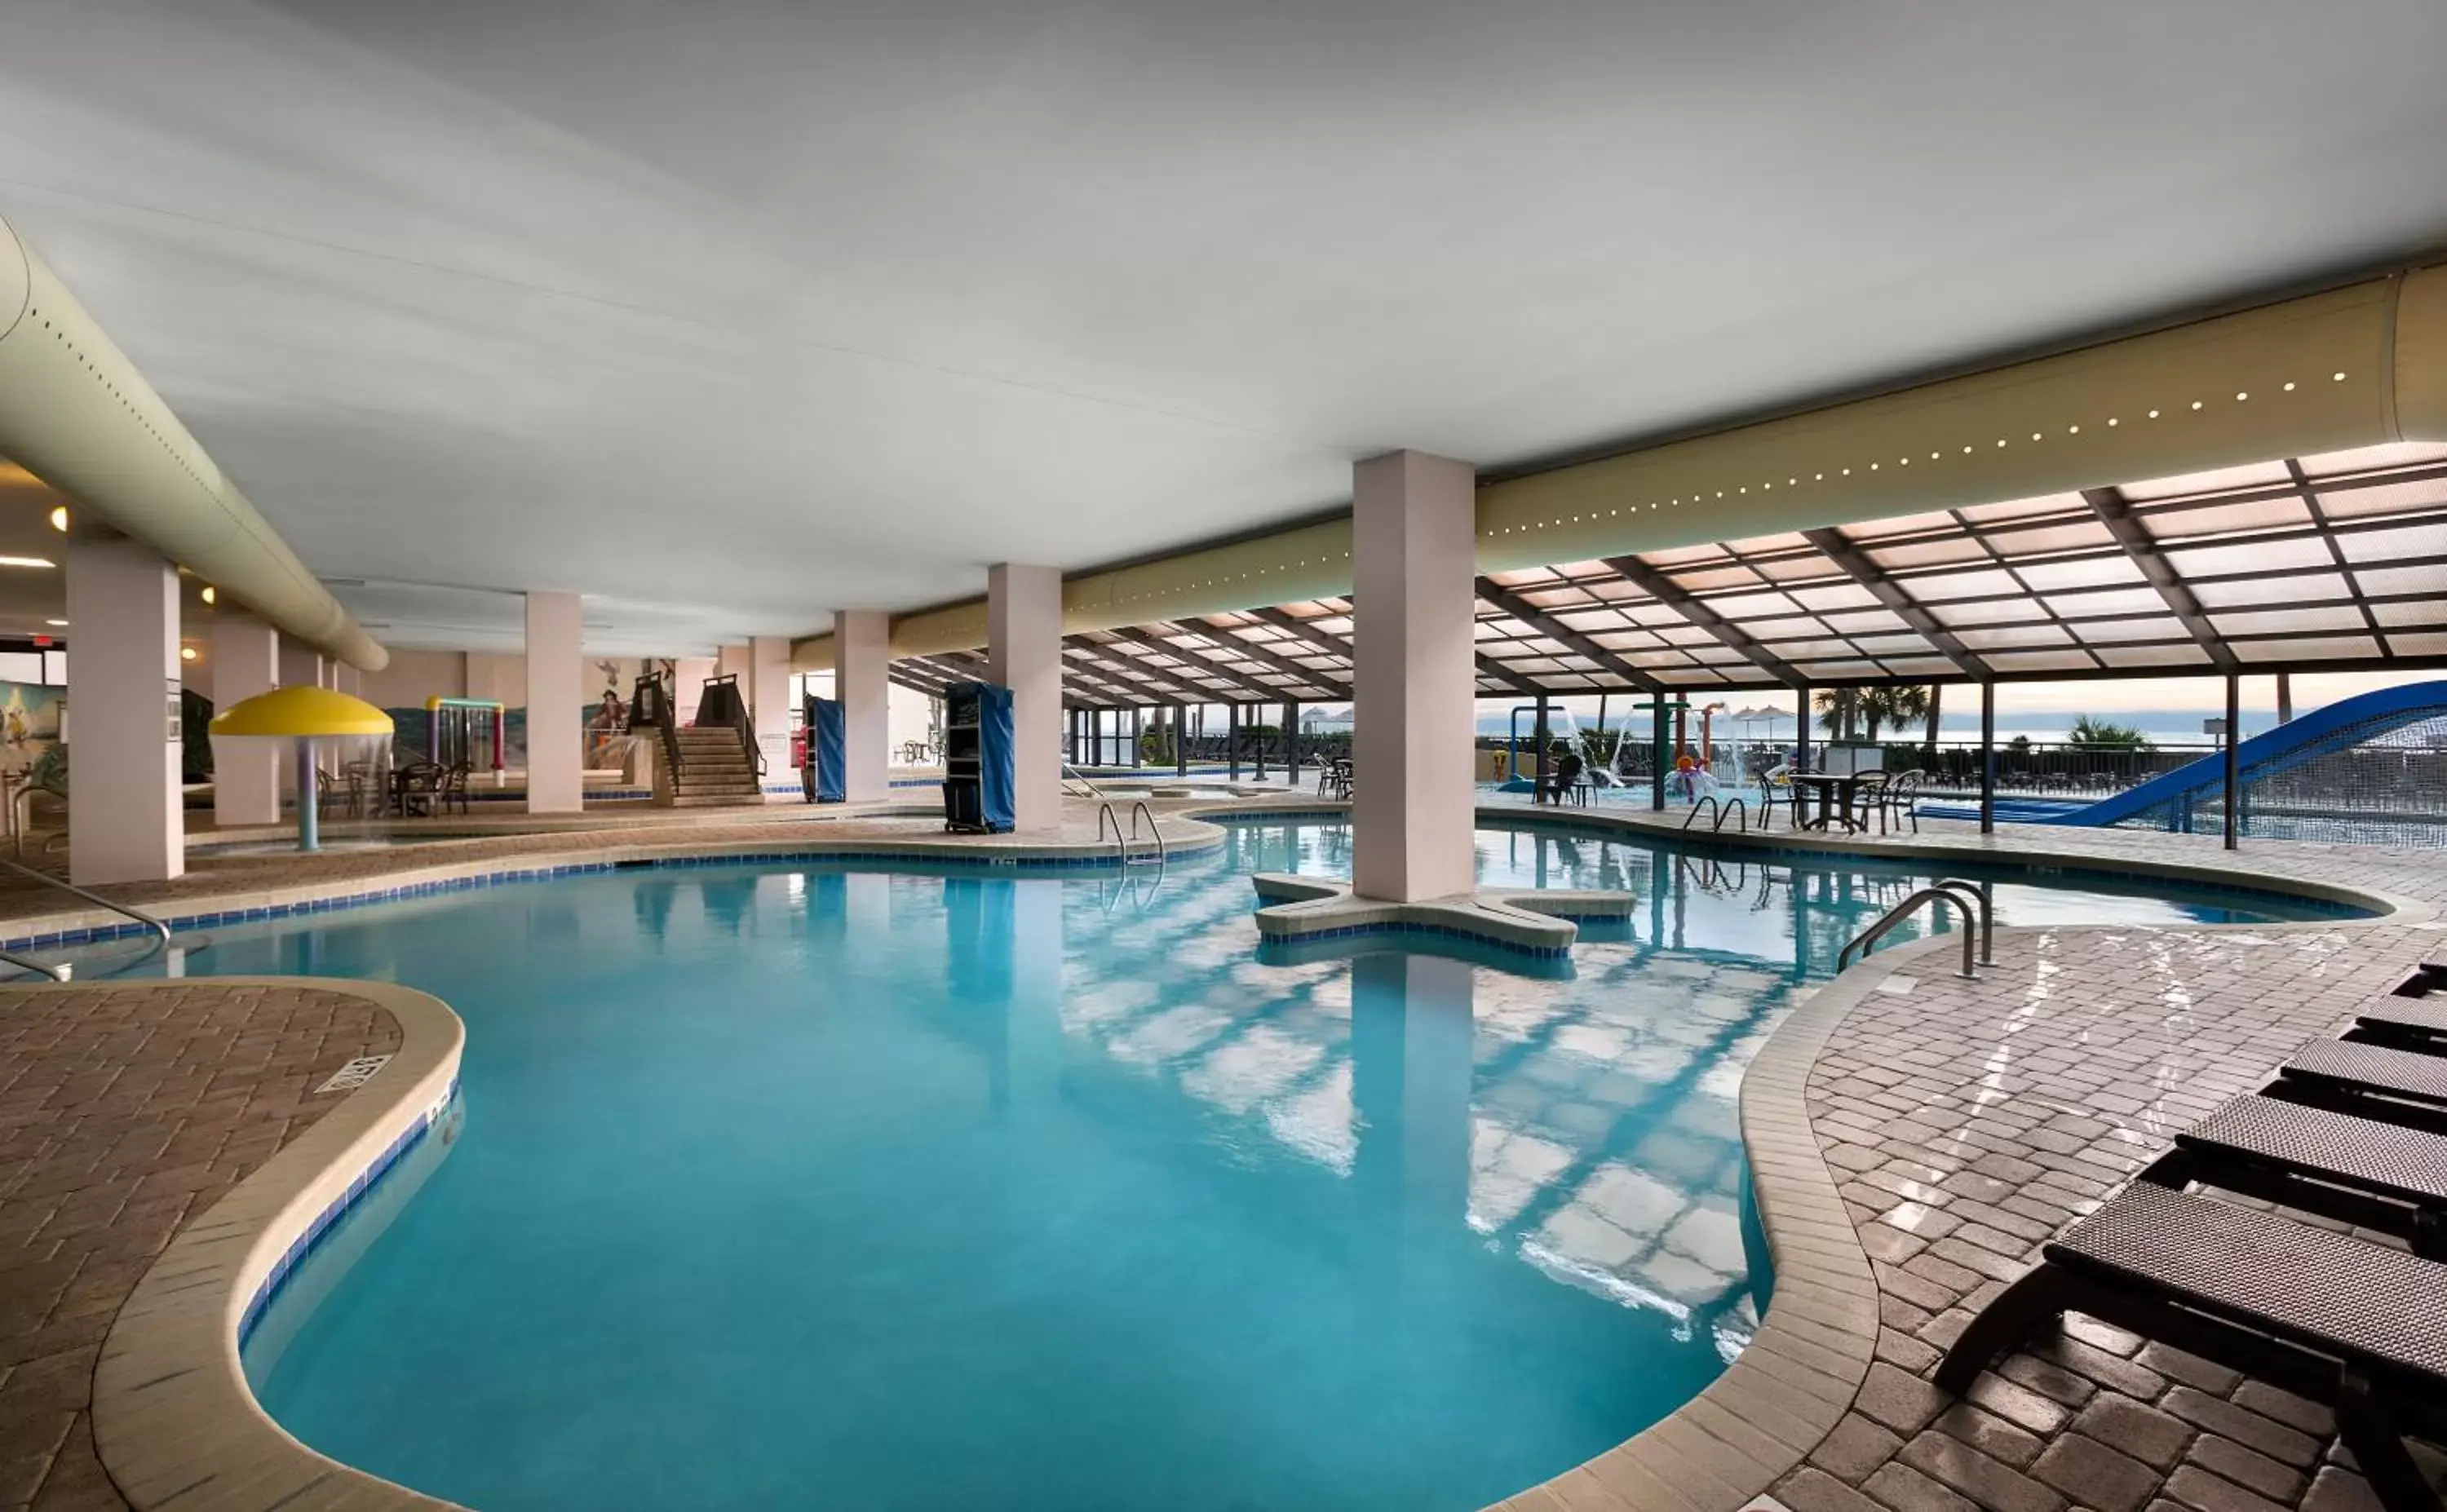 Swimming Pool in Breakers Resort Hotel